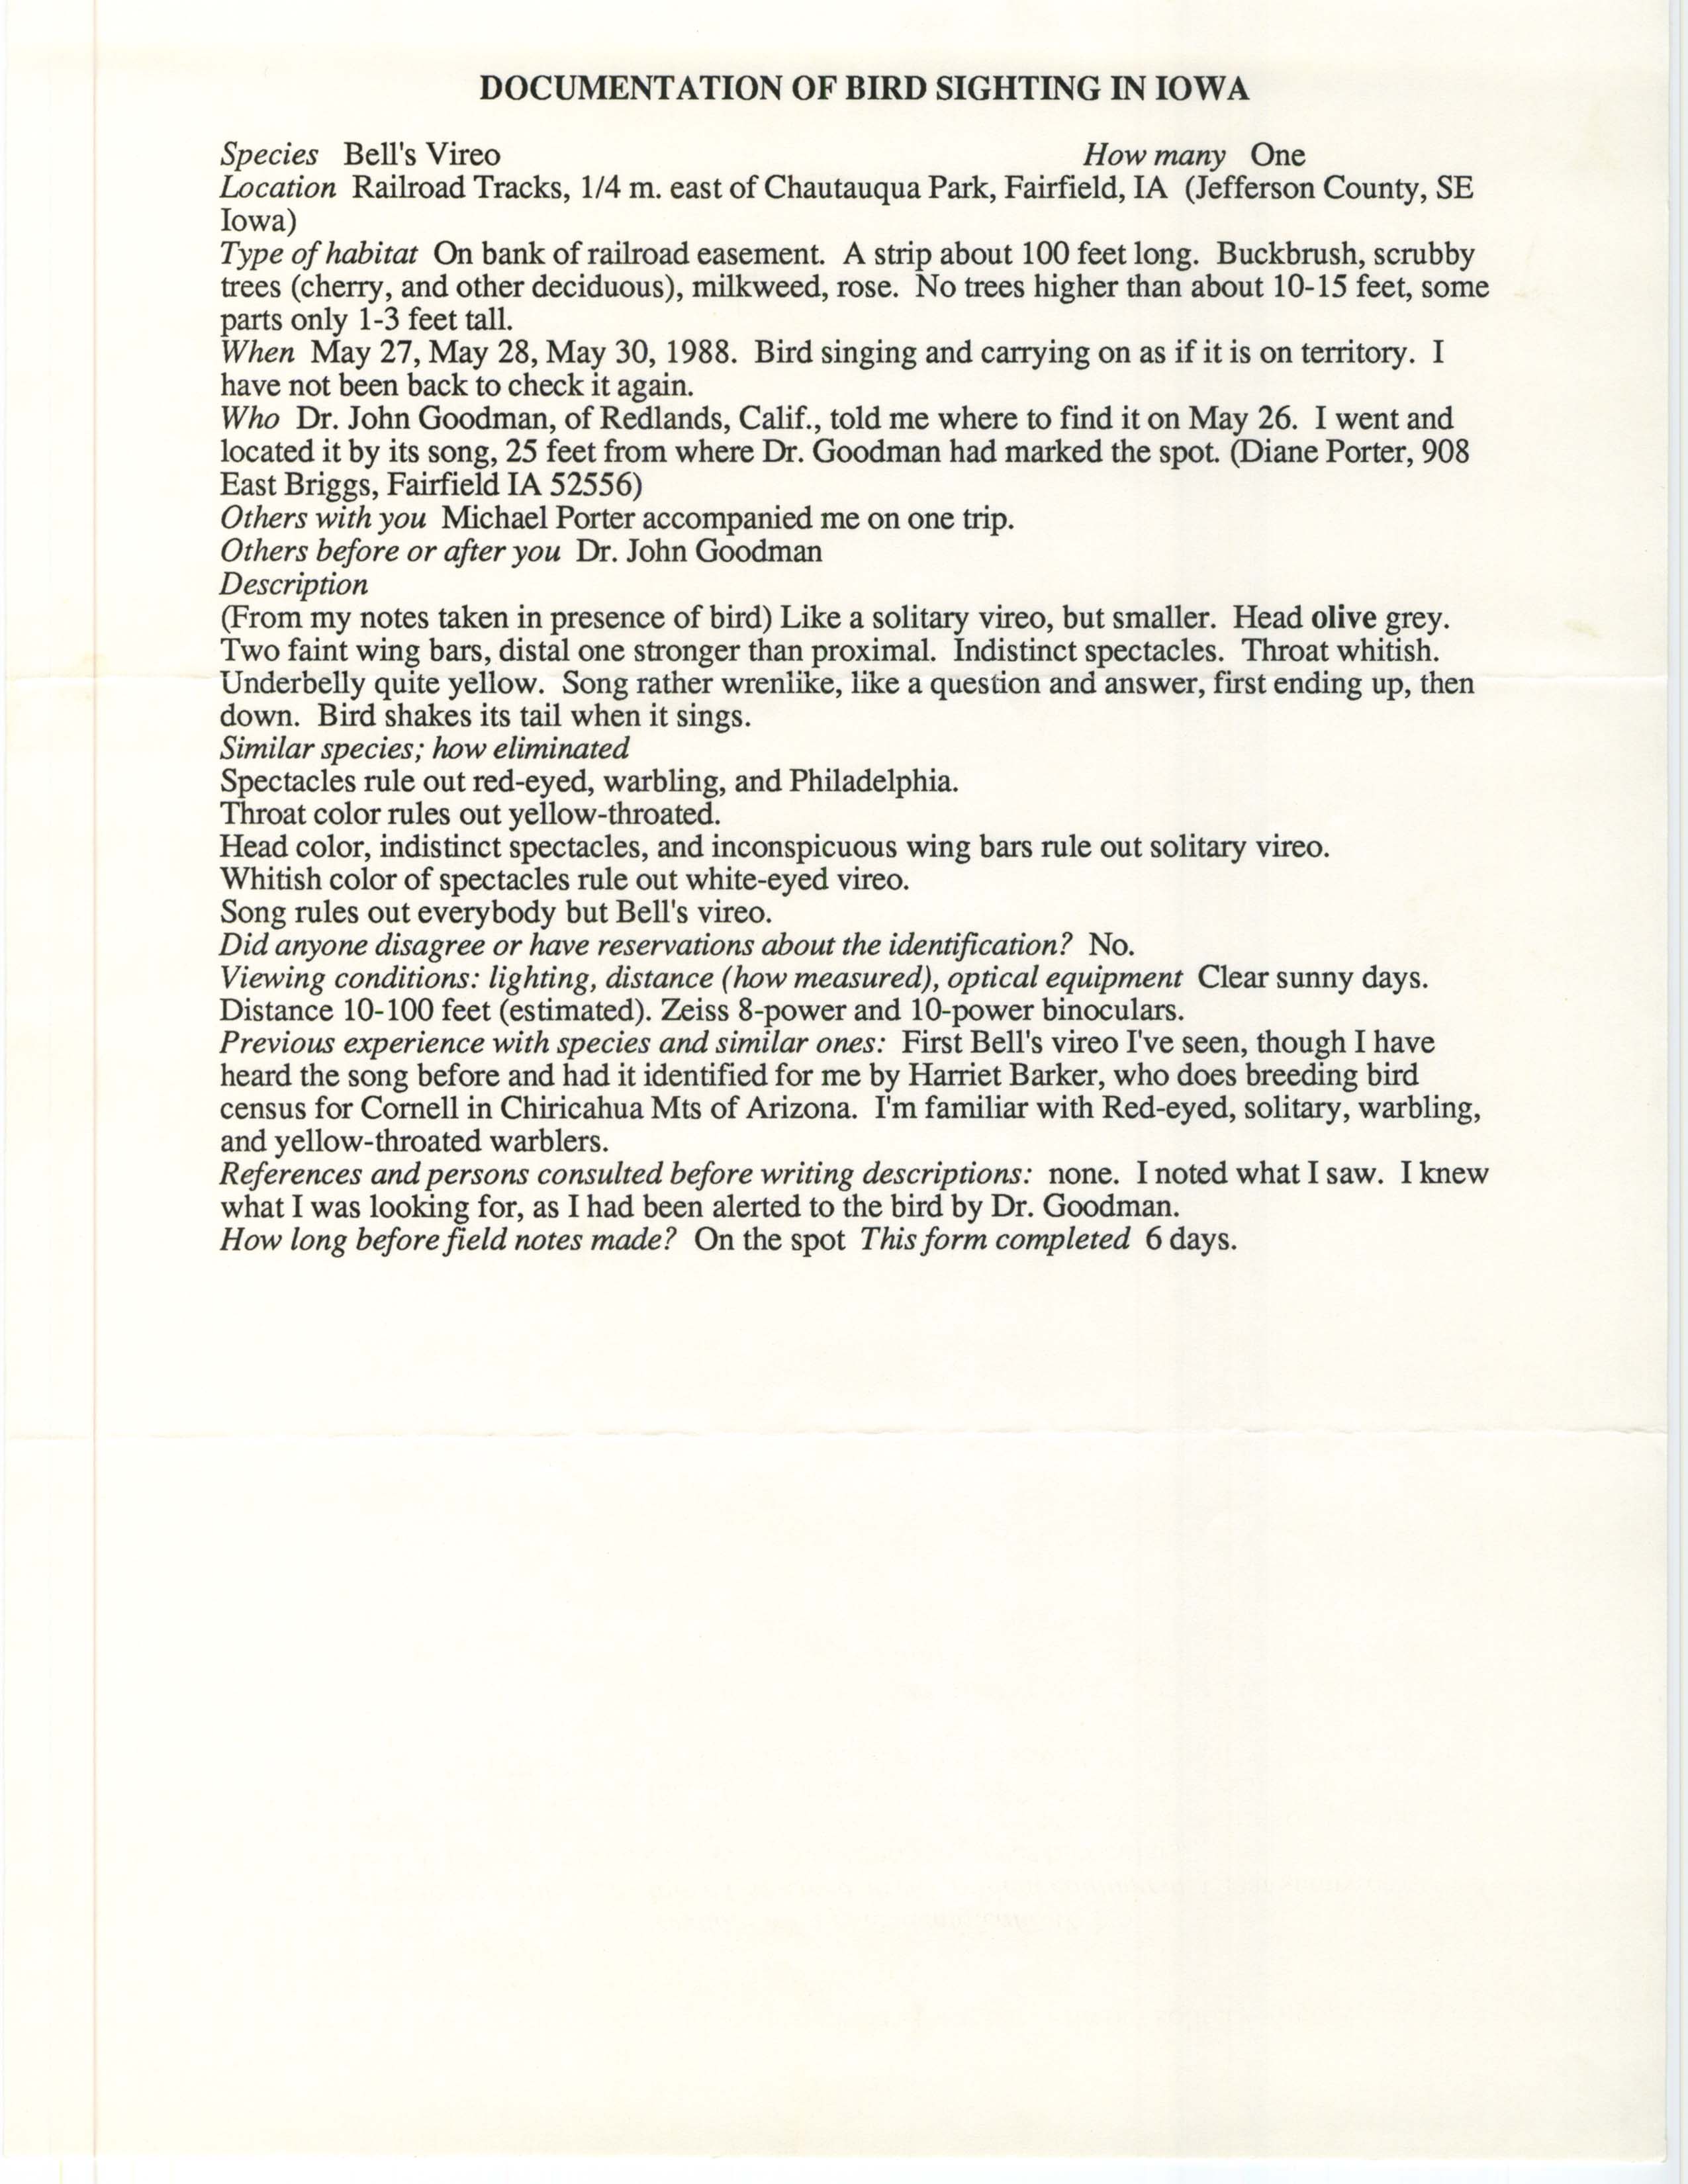 Rare bird documentation form for Bell's Vireo east of Chautauqua Park in Fairfield in 1988